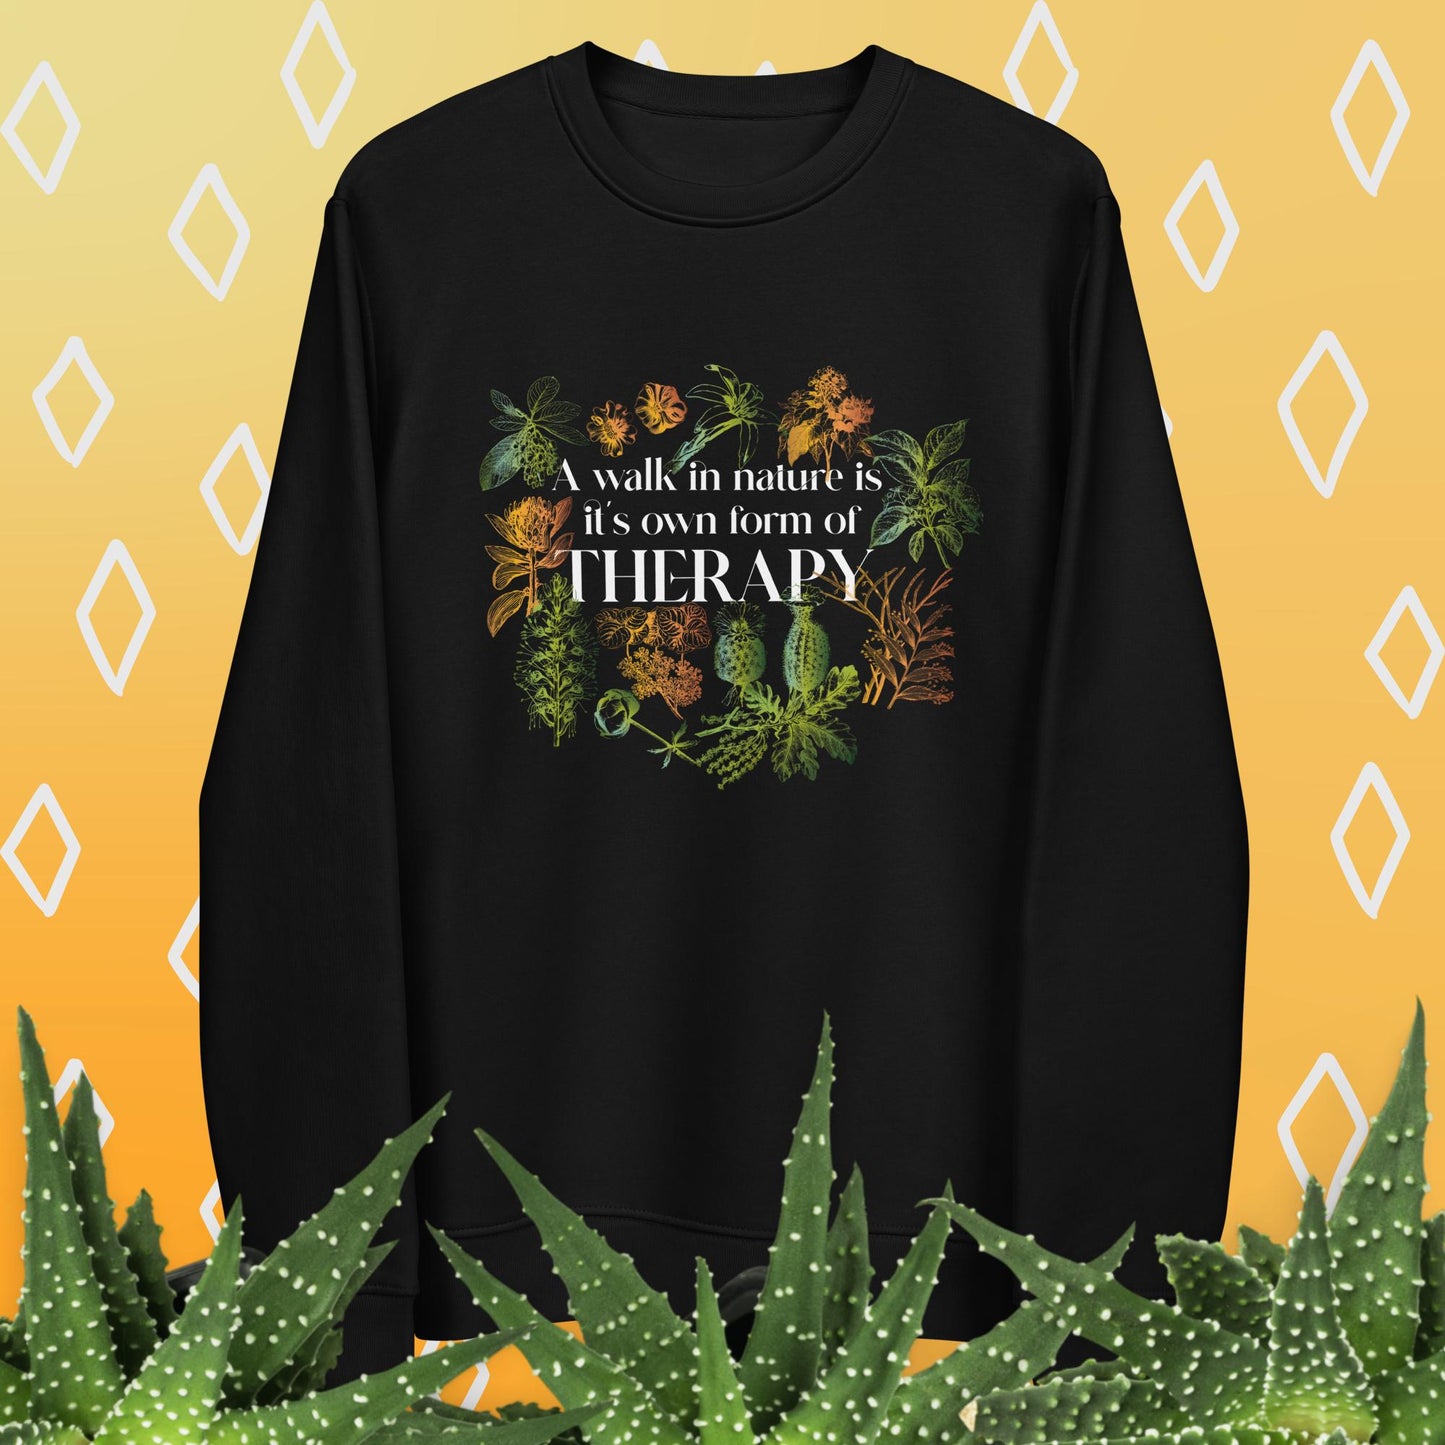 Meditation 'Walk In Nature Therapy' Organic Cotton Sweatshirt - Fun Sweatshirt